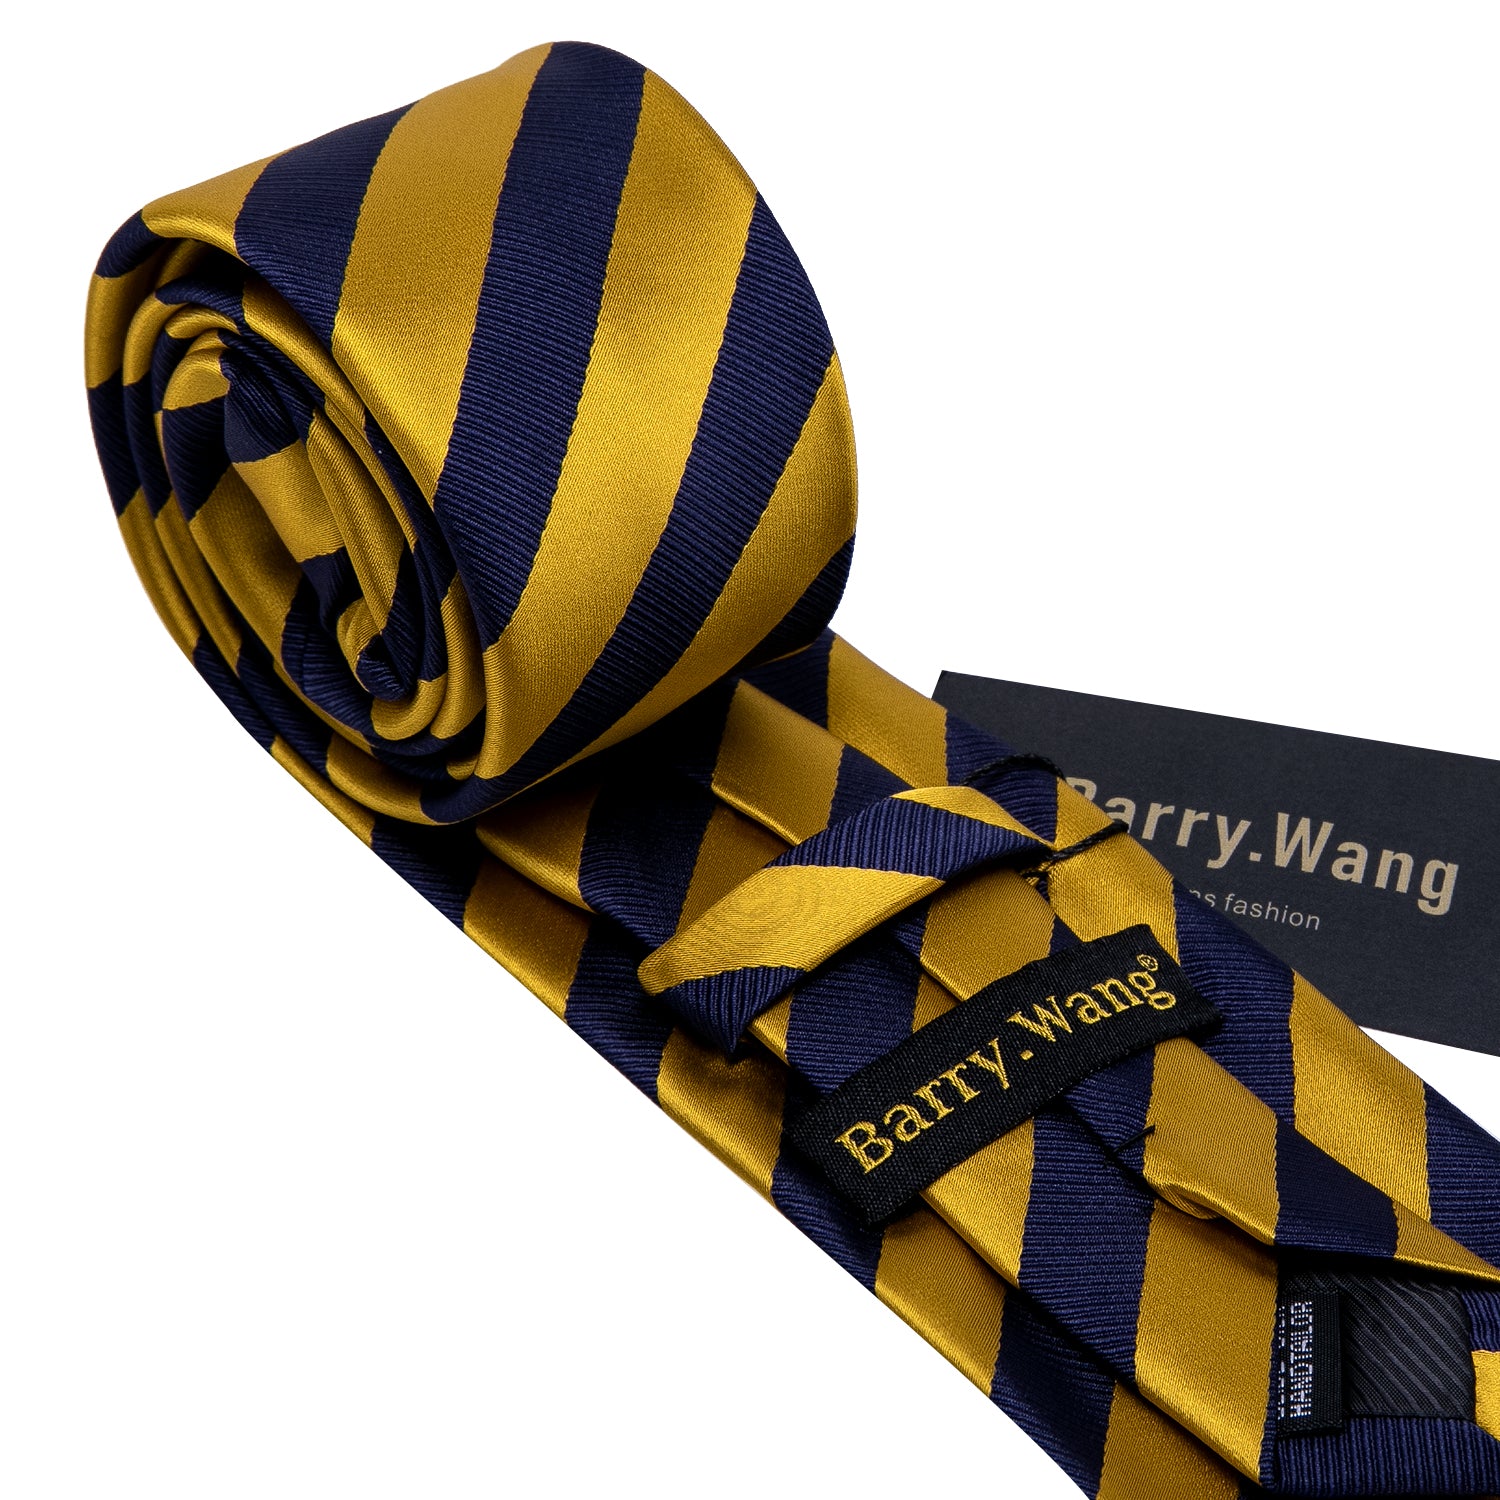 New Blue Gold Striped Silk Tie Hanky Cufflinks Set